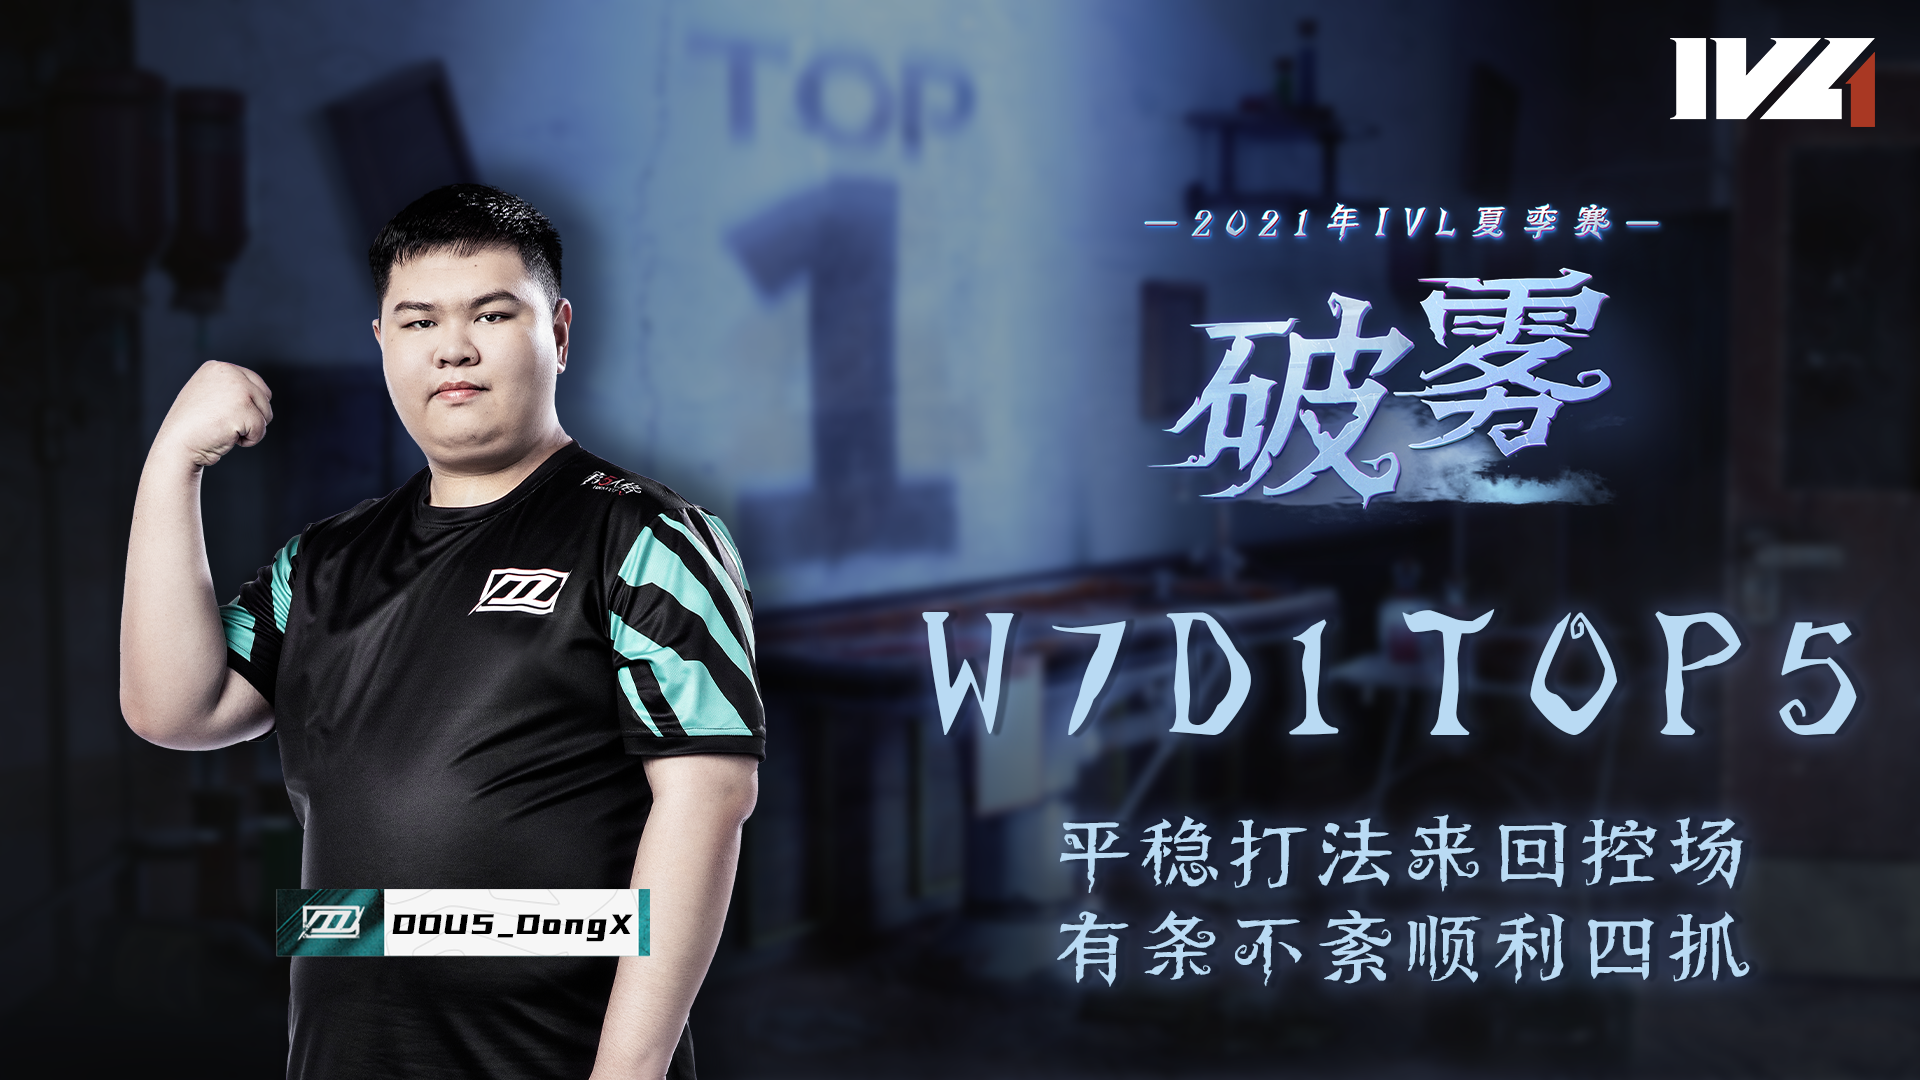 【2021IVL】夏季赛W7D1 TOP5：DOU5_DongX有条不紊顺利四抓